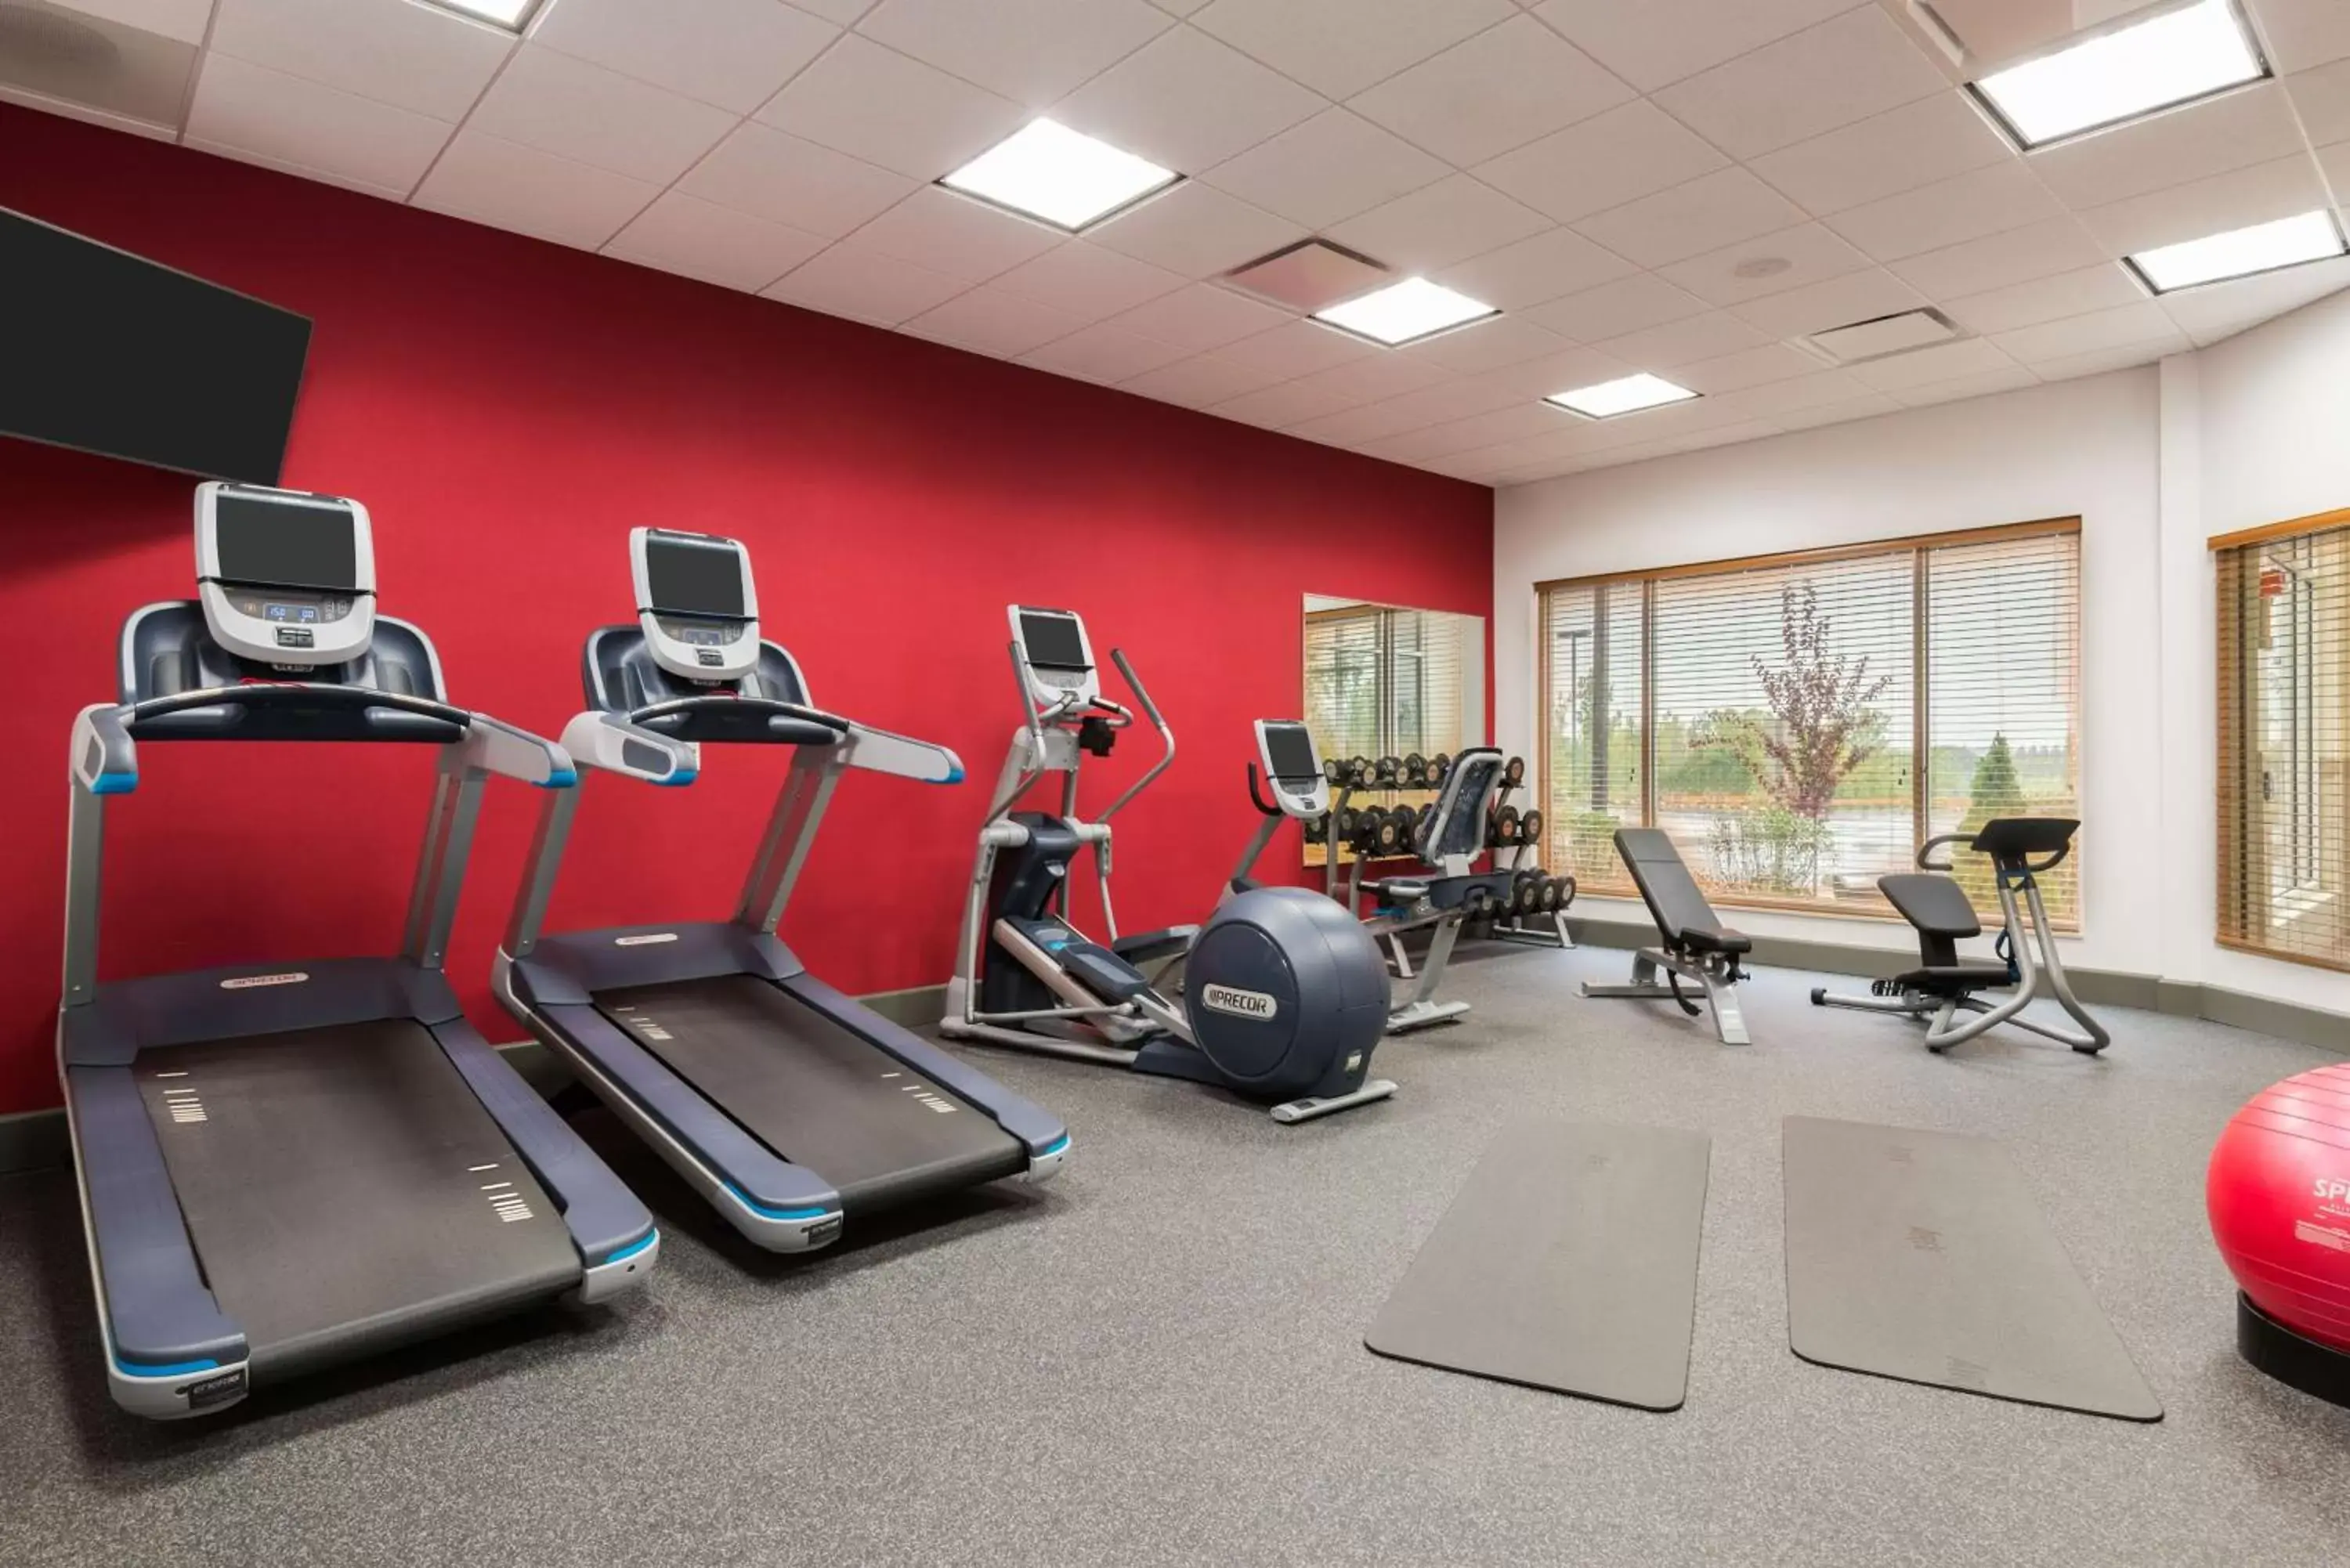 Fitness centre/facilities, Fitness Center/Facilities in Hilton Garden Inn Wayne